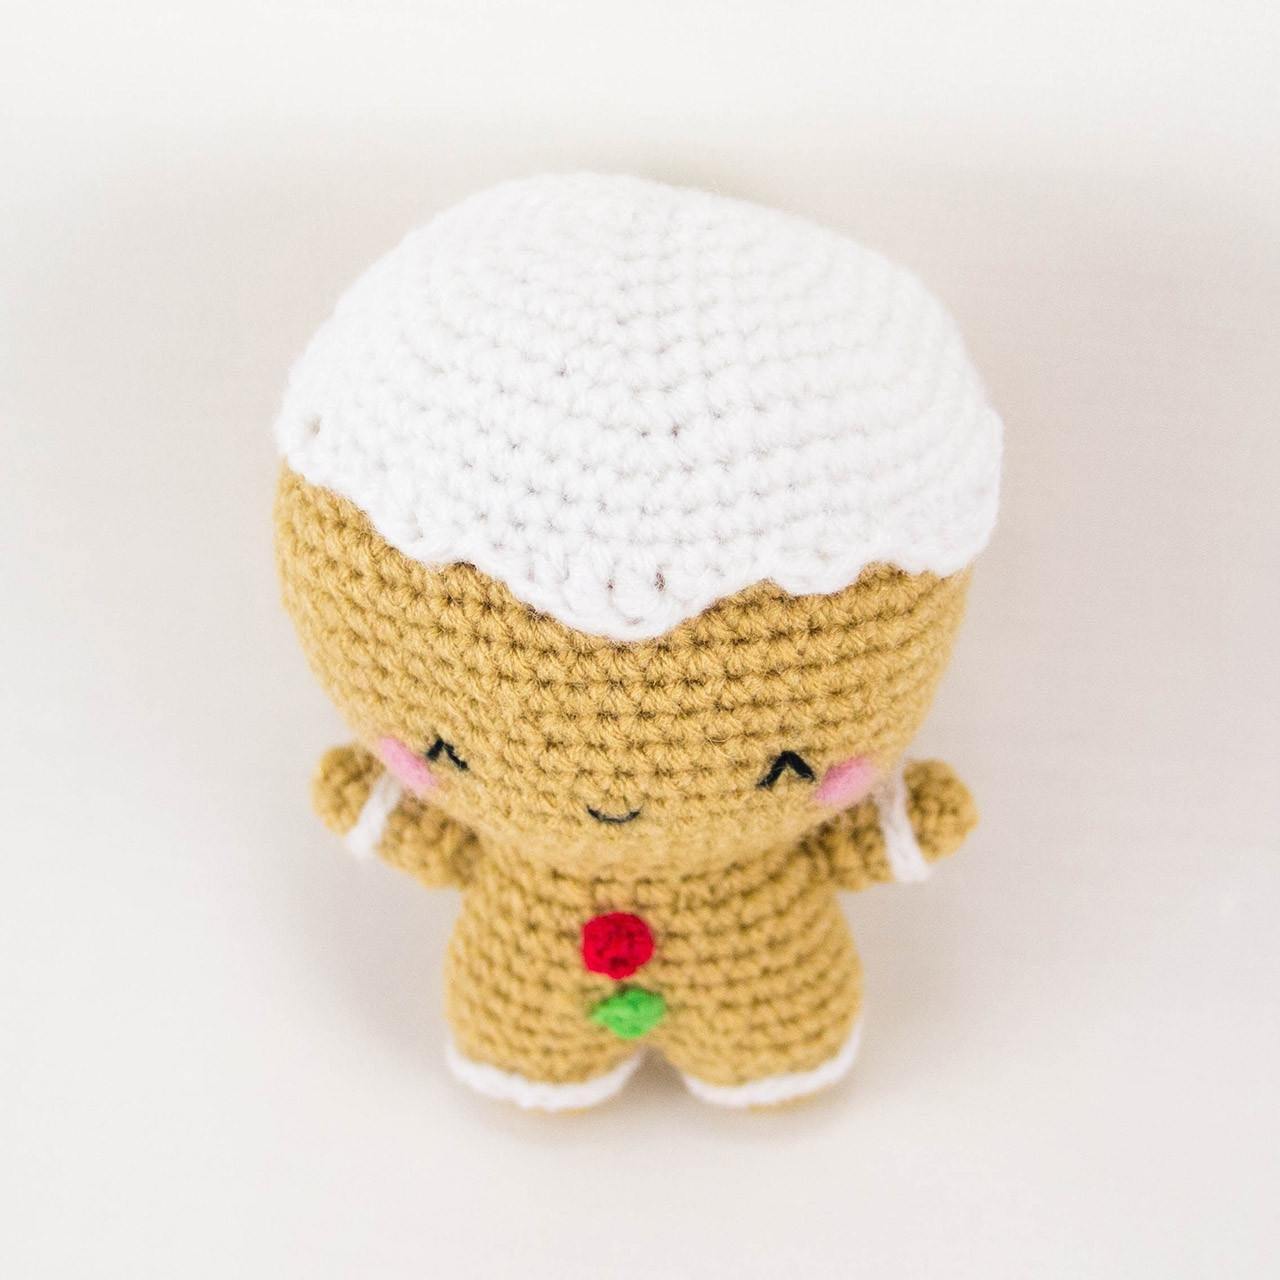 Crochet Gingerbread Man Amigurumi Pattern for DIY Christmas Gifts Top View